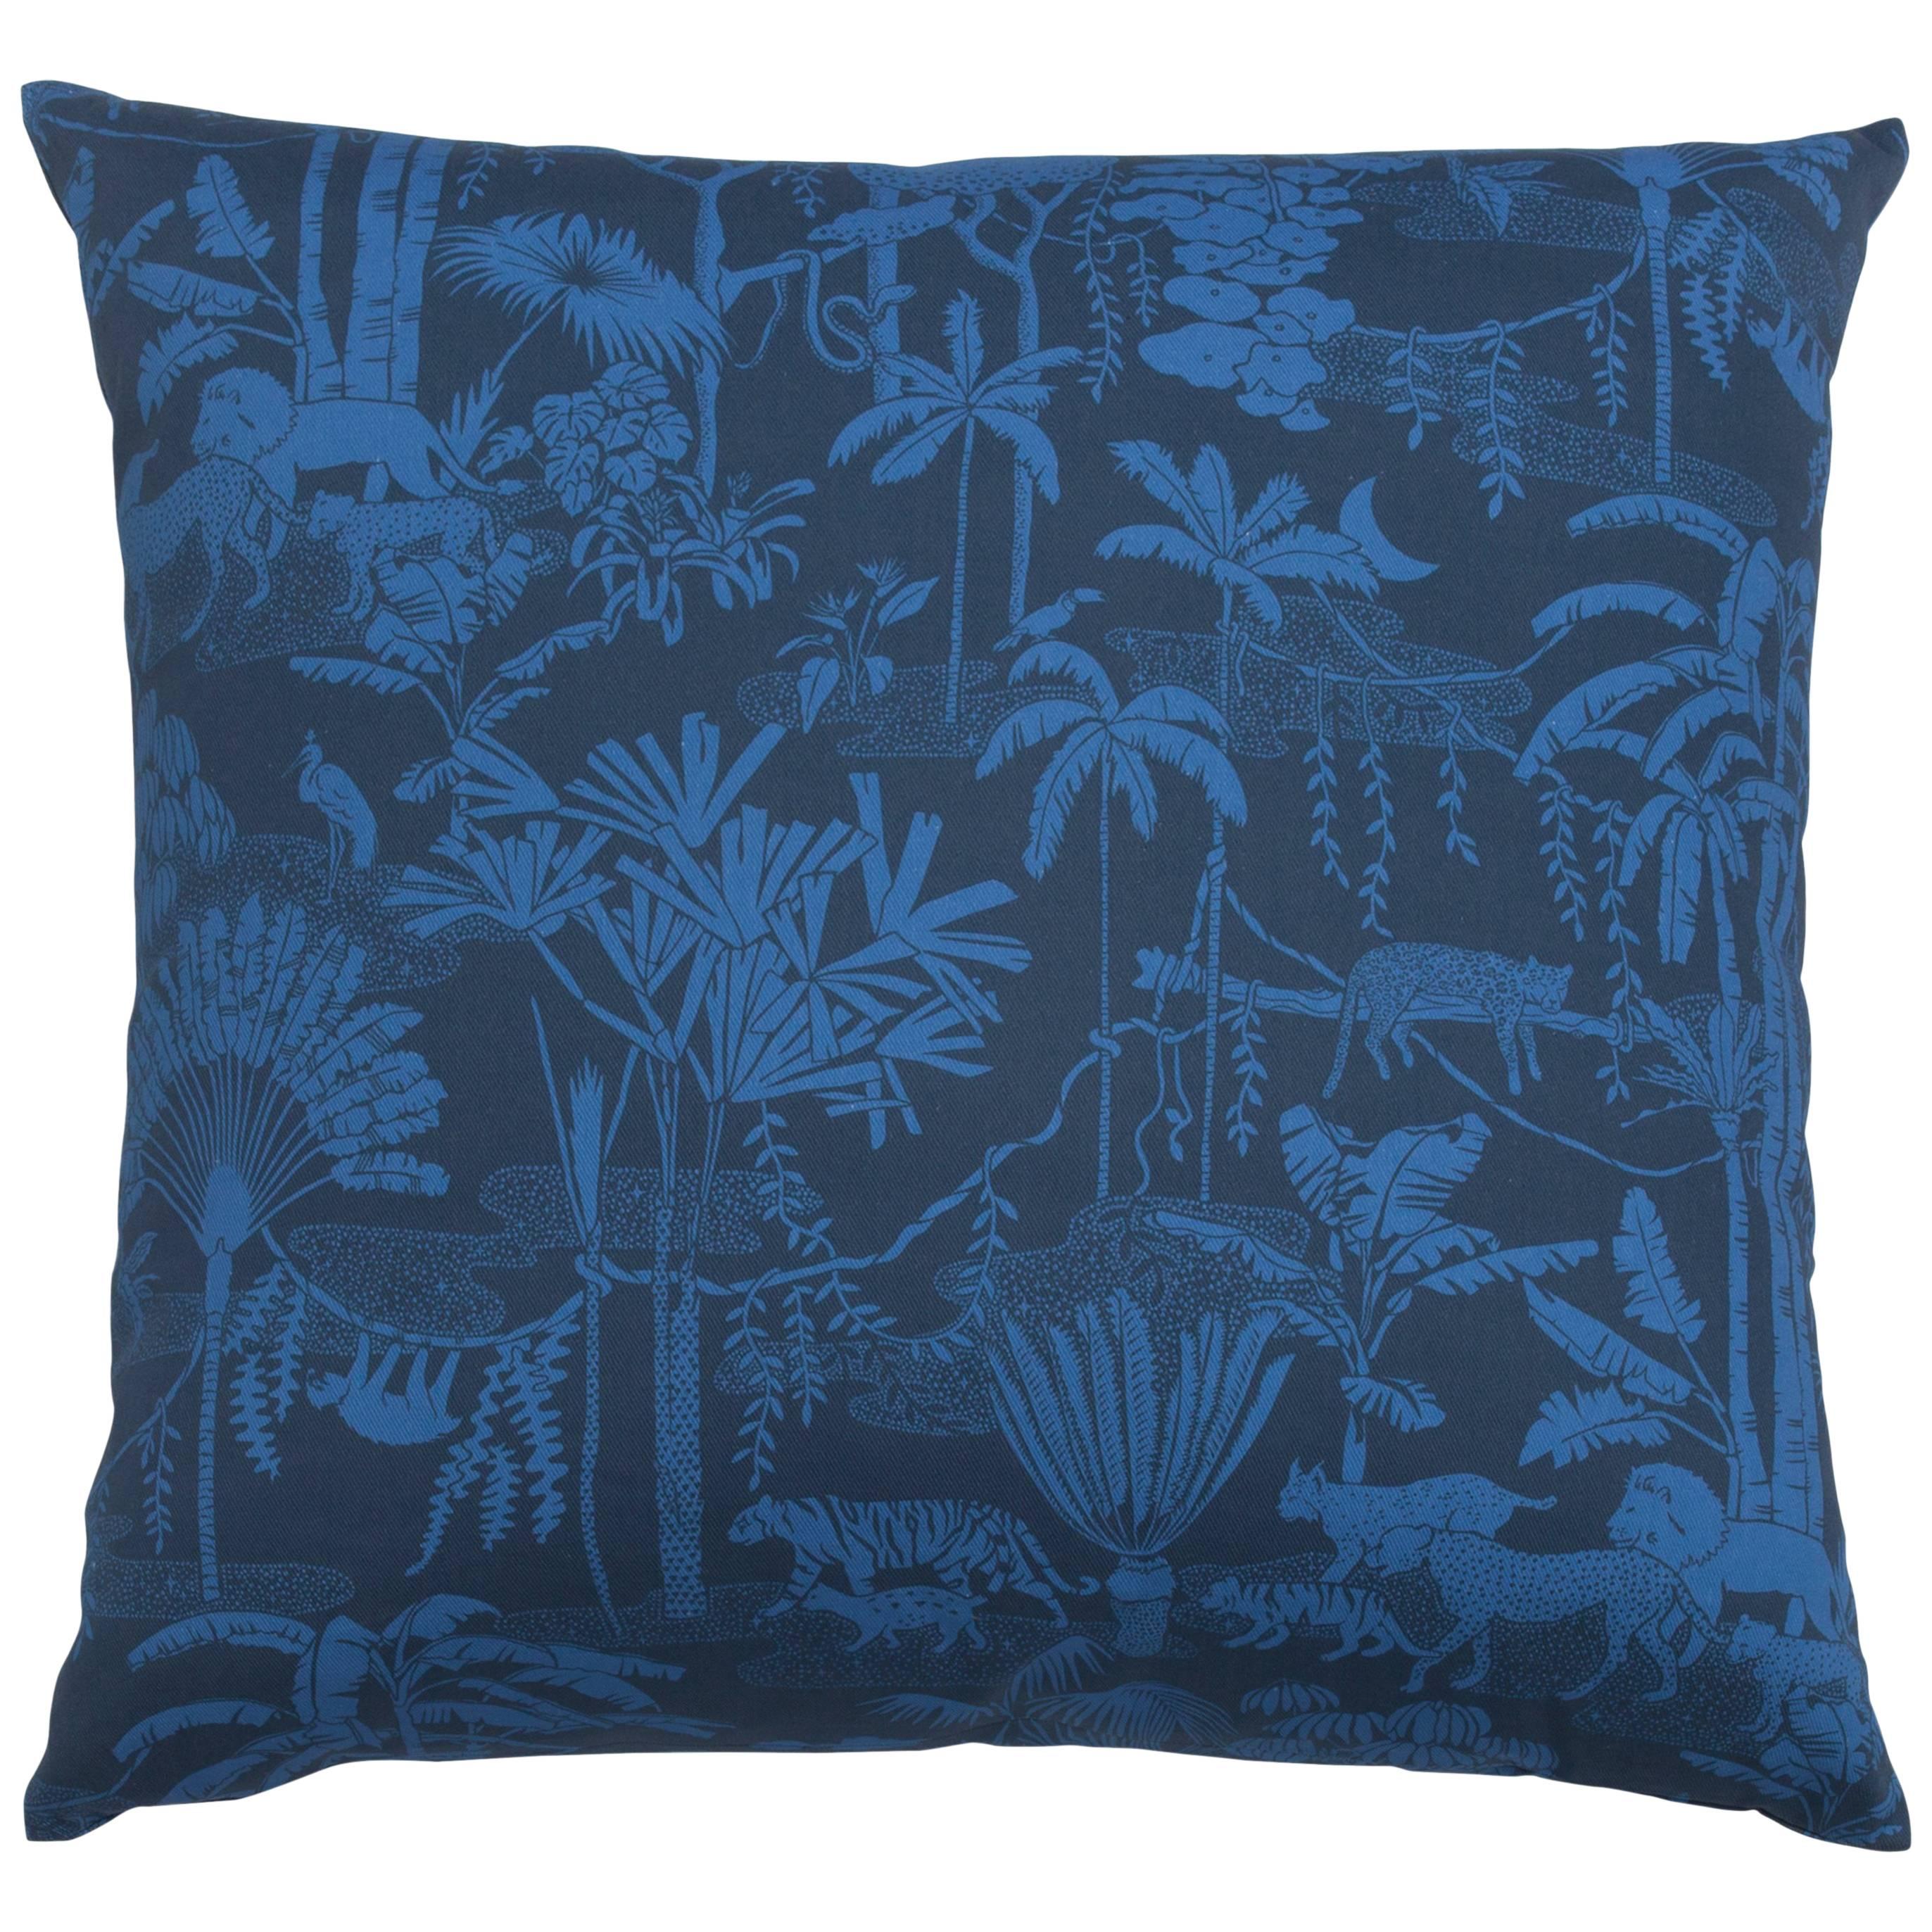 Jungle Dream Pillow in Color Mediterranean 'Cobalt Blue on Navy Blue' For Sale